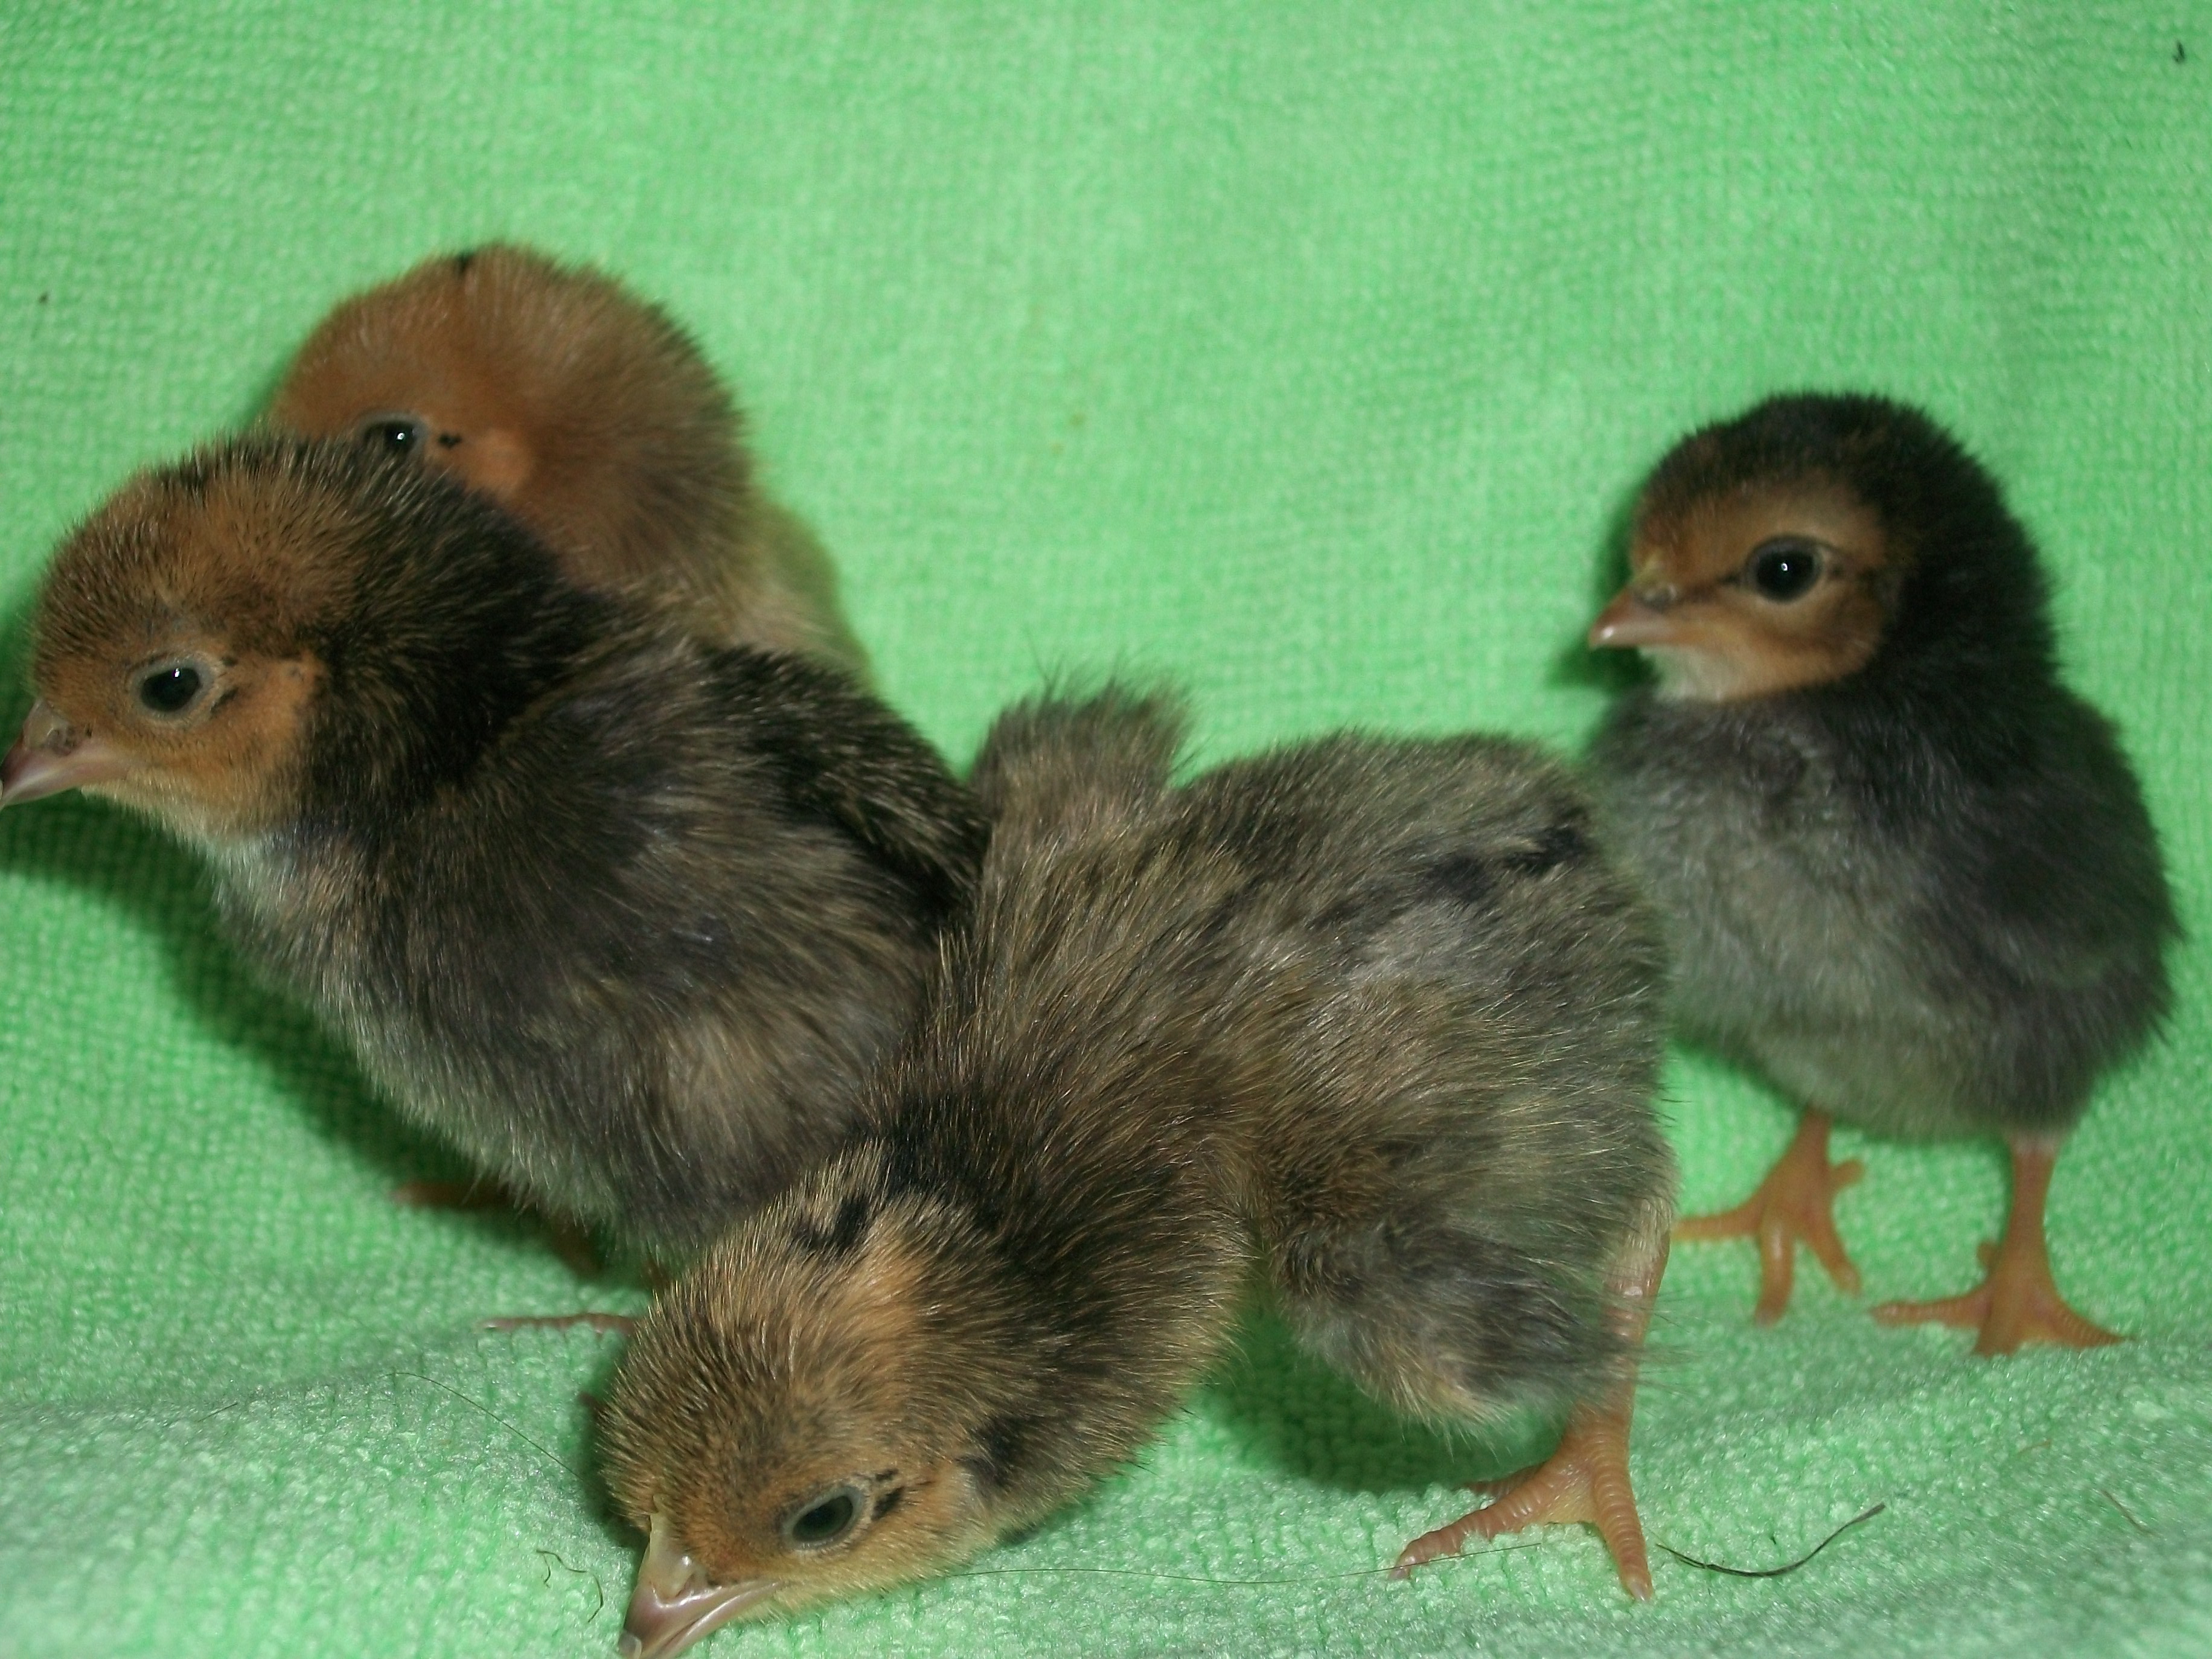 2014 Easter hatch along chicks